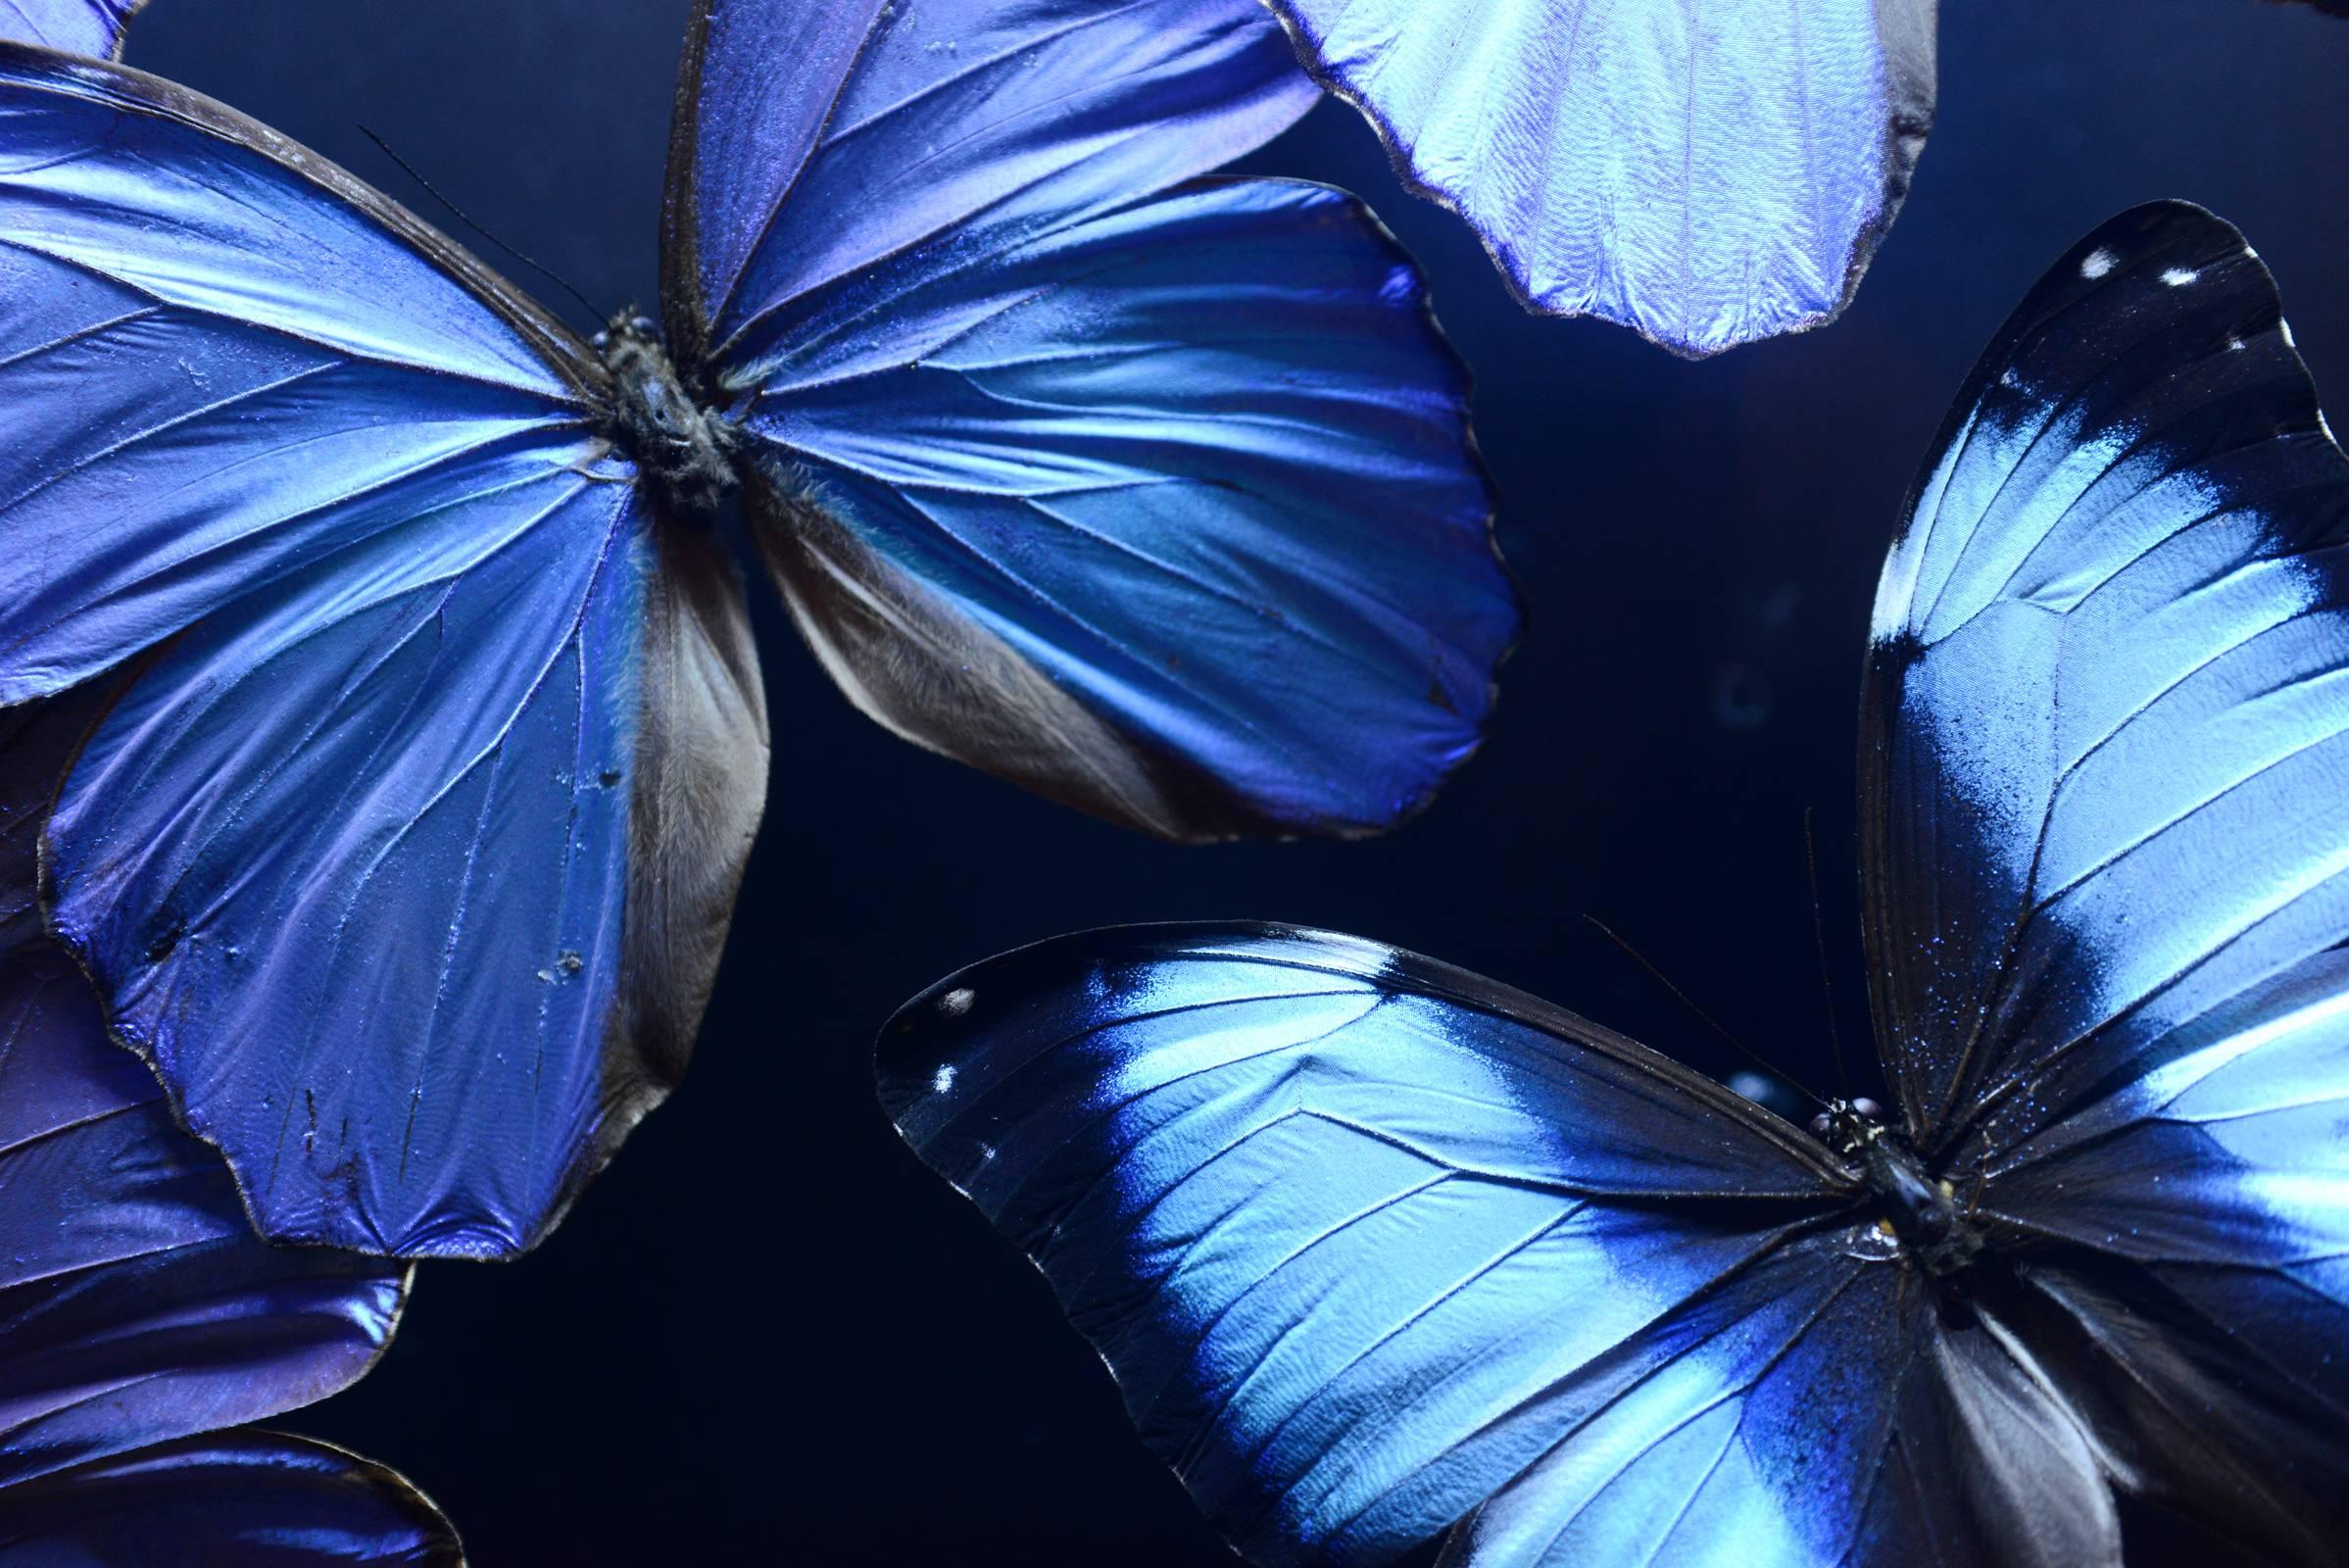 Steel Butterflies Morphos from Peru under Led Box, 2017